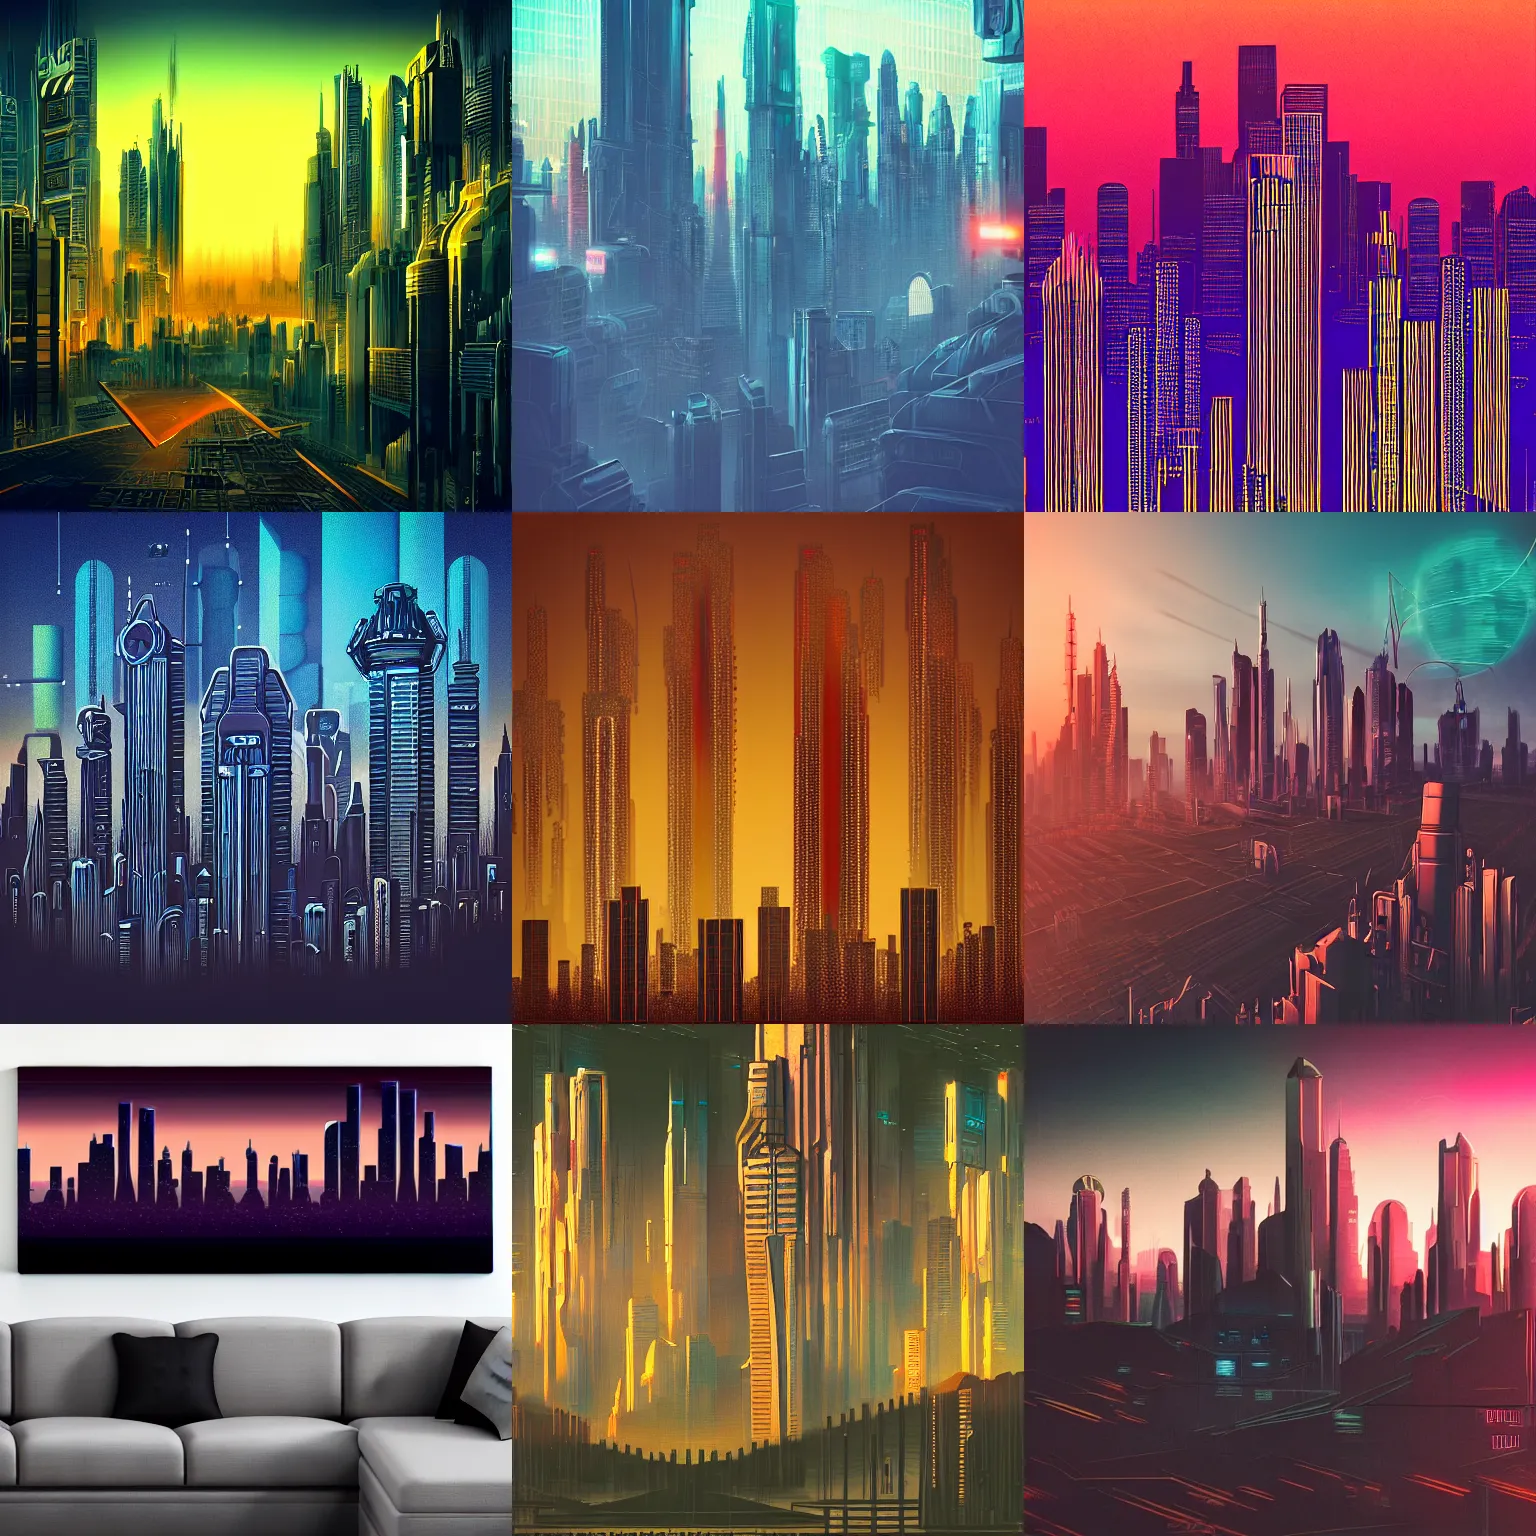 Prompt: detailed photo of a beautiful sci-fi cyberpunk Art Deco skyline at dusk, romantic light